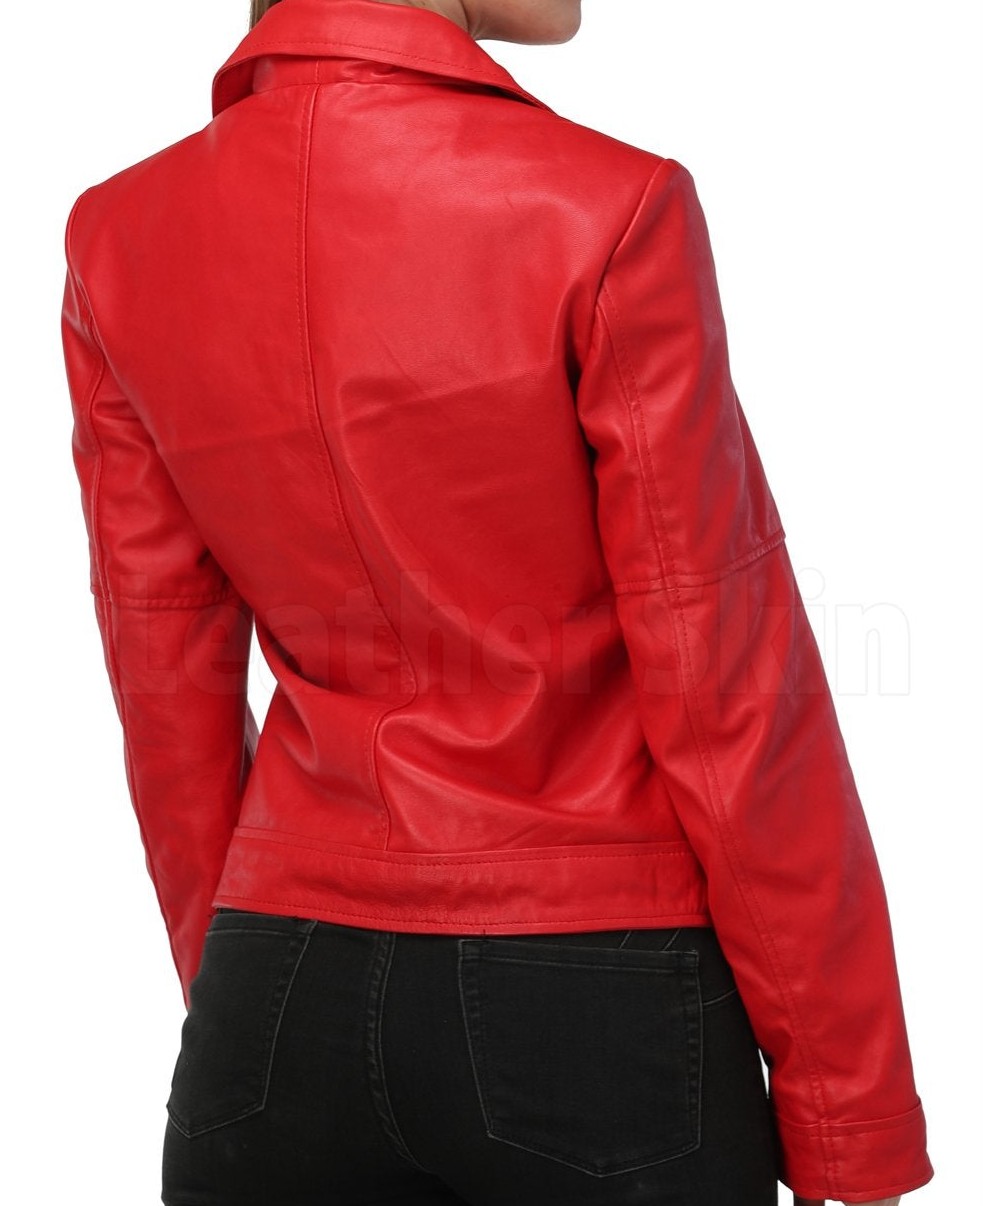 Greece Women's Red Leather Jacket